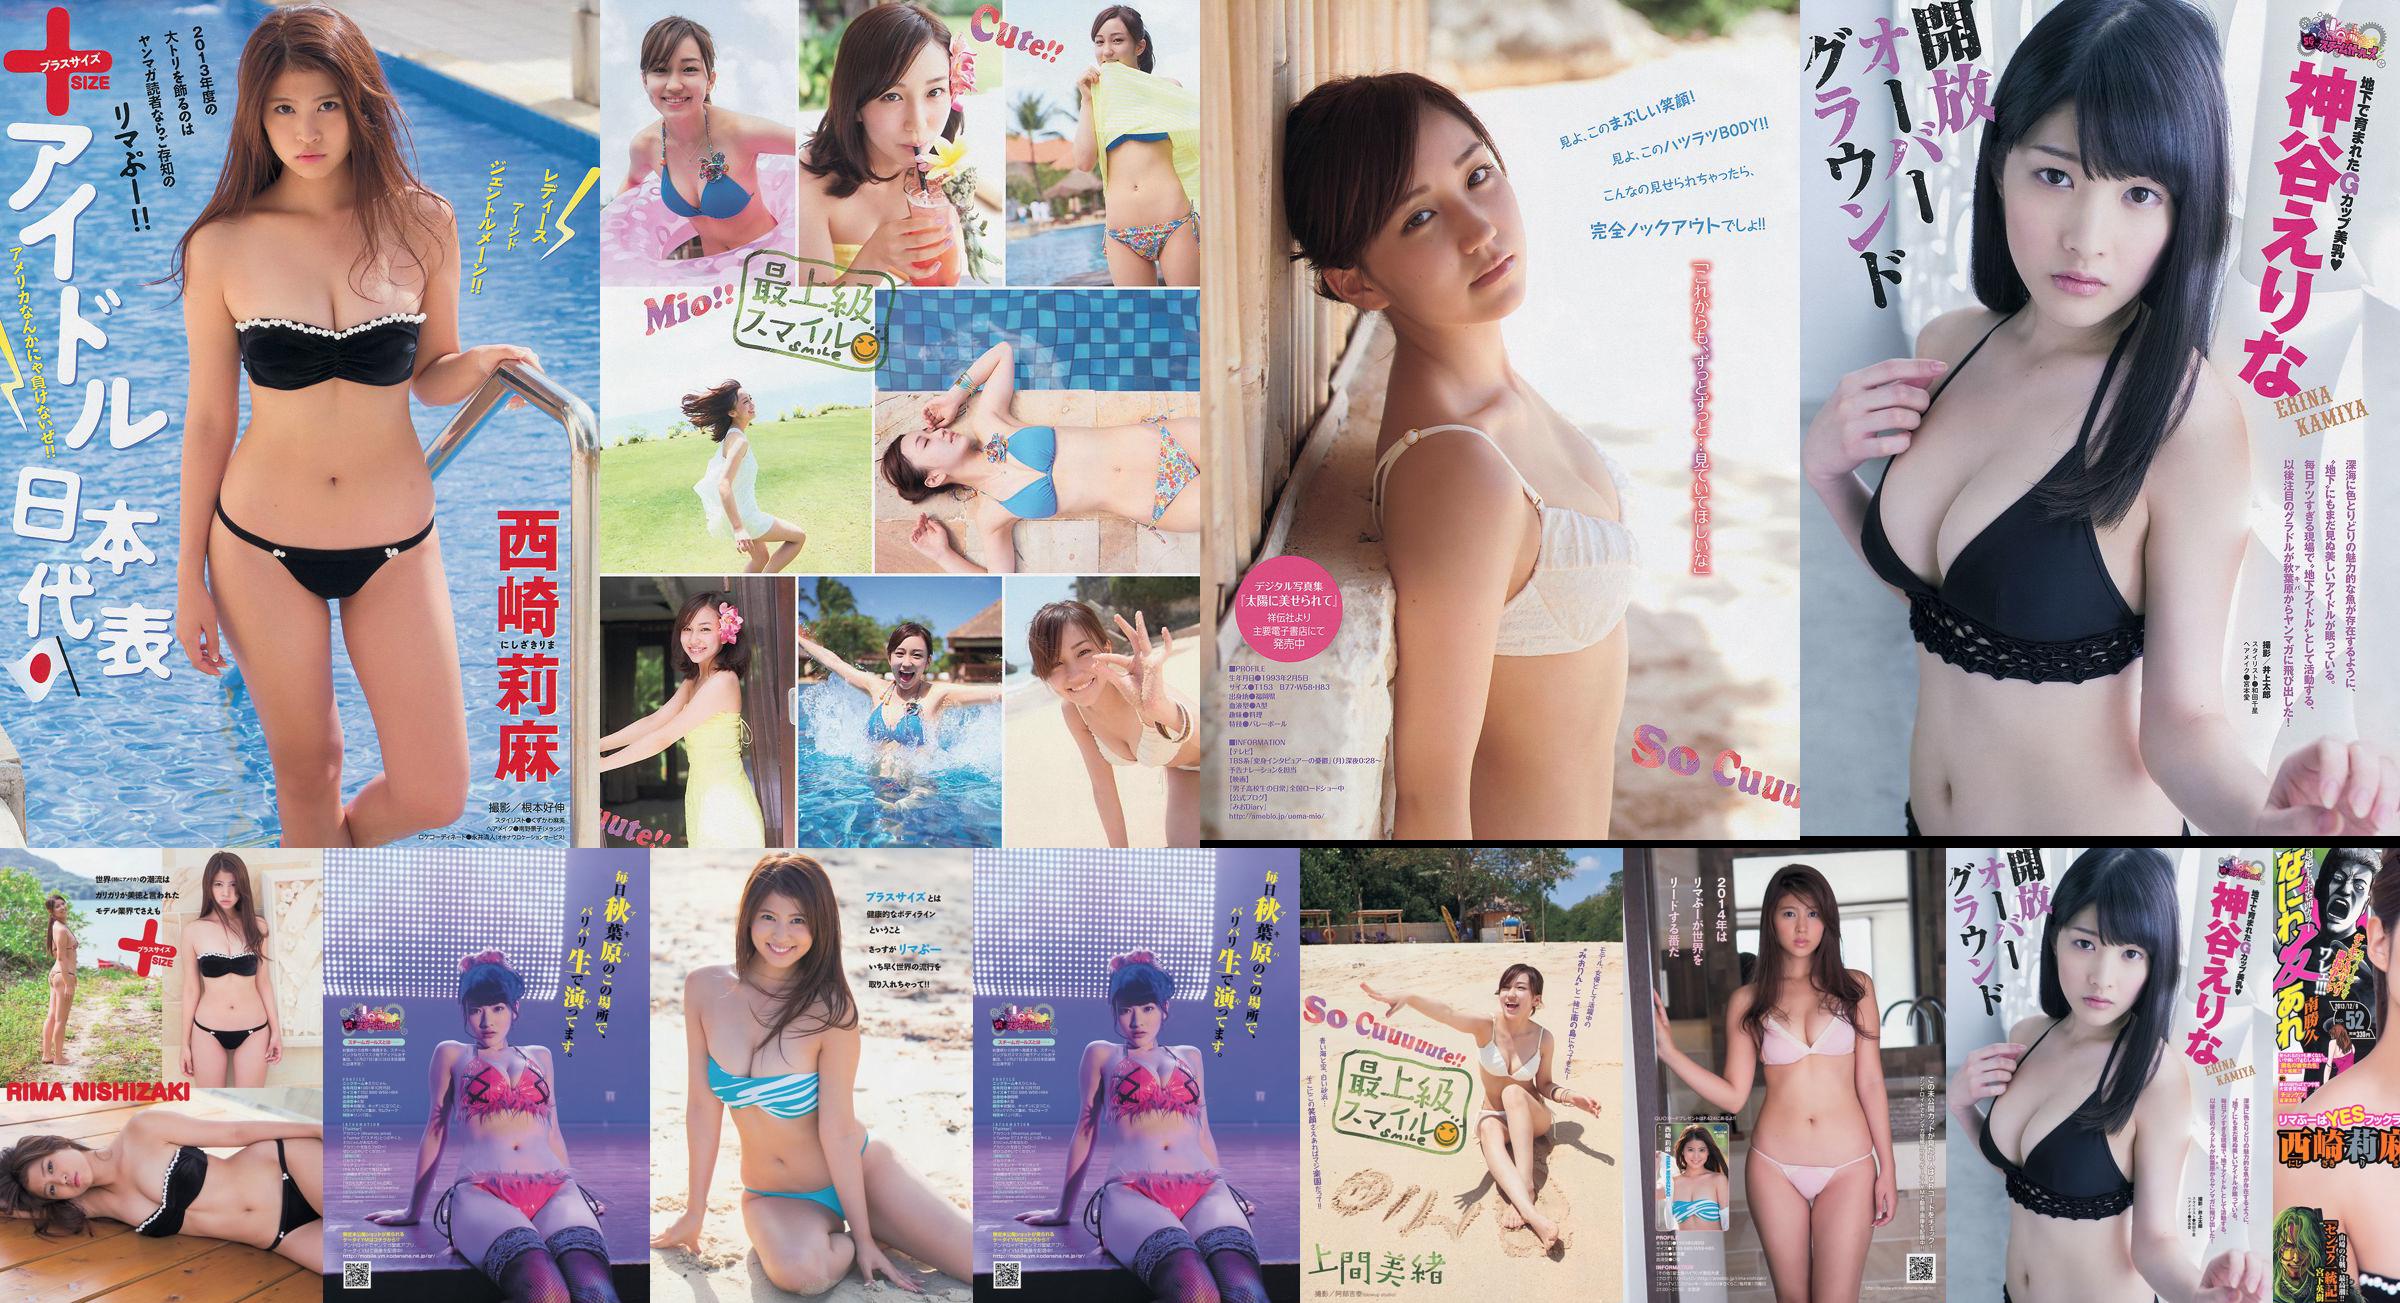 [Tạp chí trẻ] Rima Nishizaki Mio Uema Erina Kamiya 2013 Ảnh số 52 Moshi No.a8b6e9 Trang 4